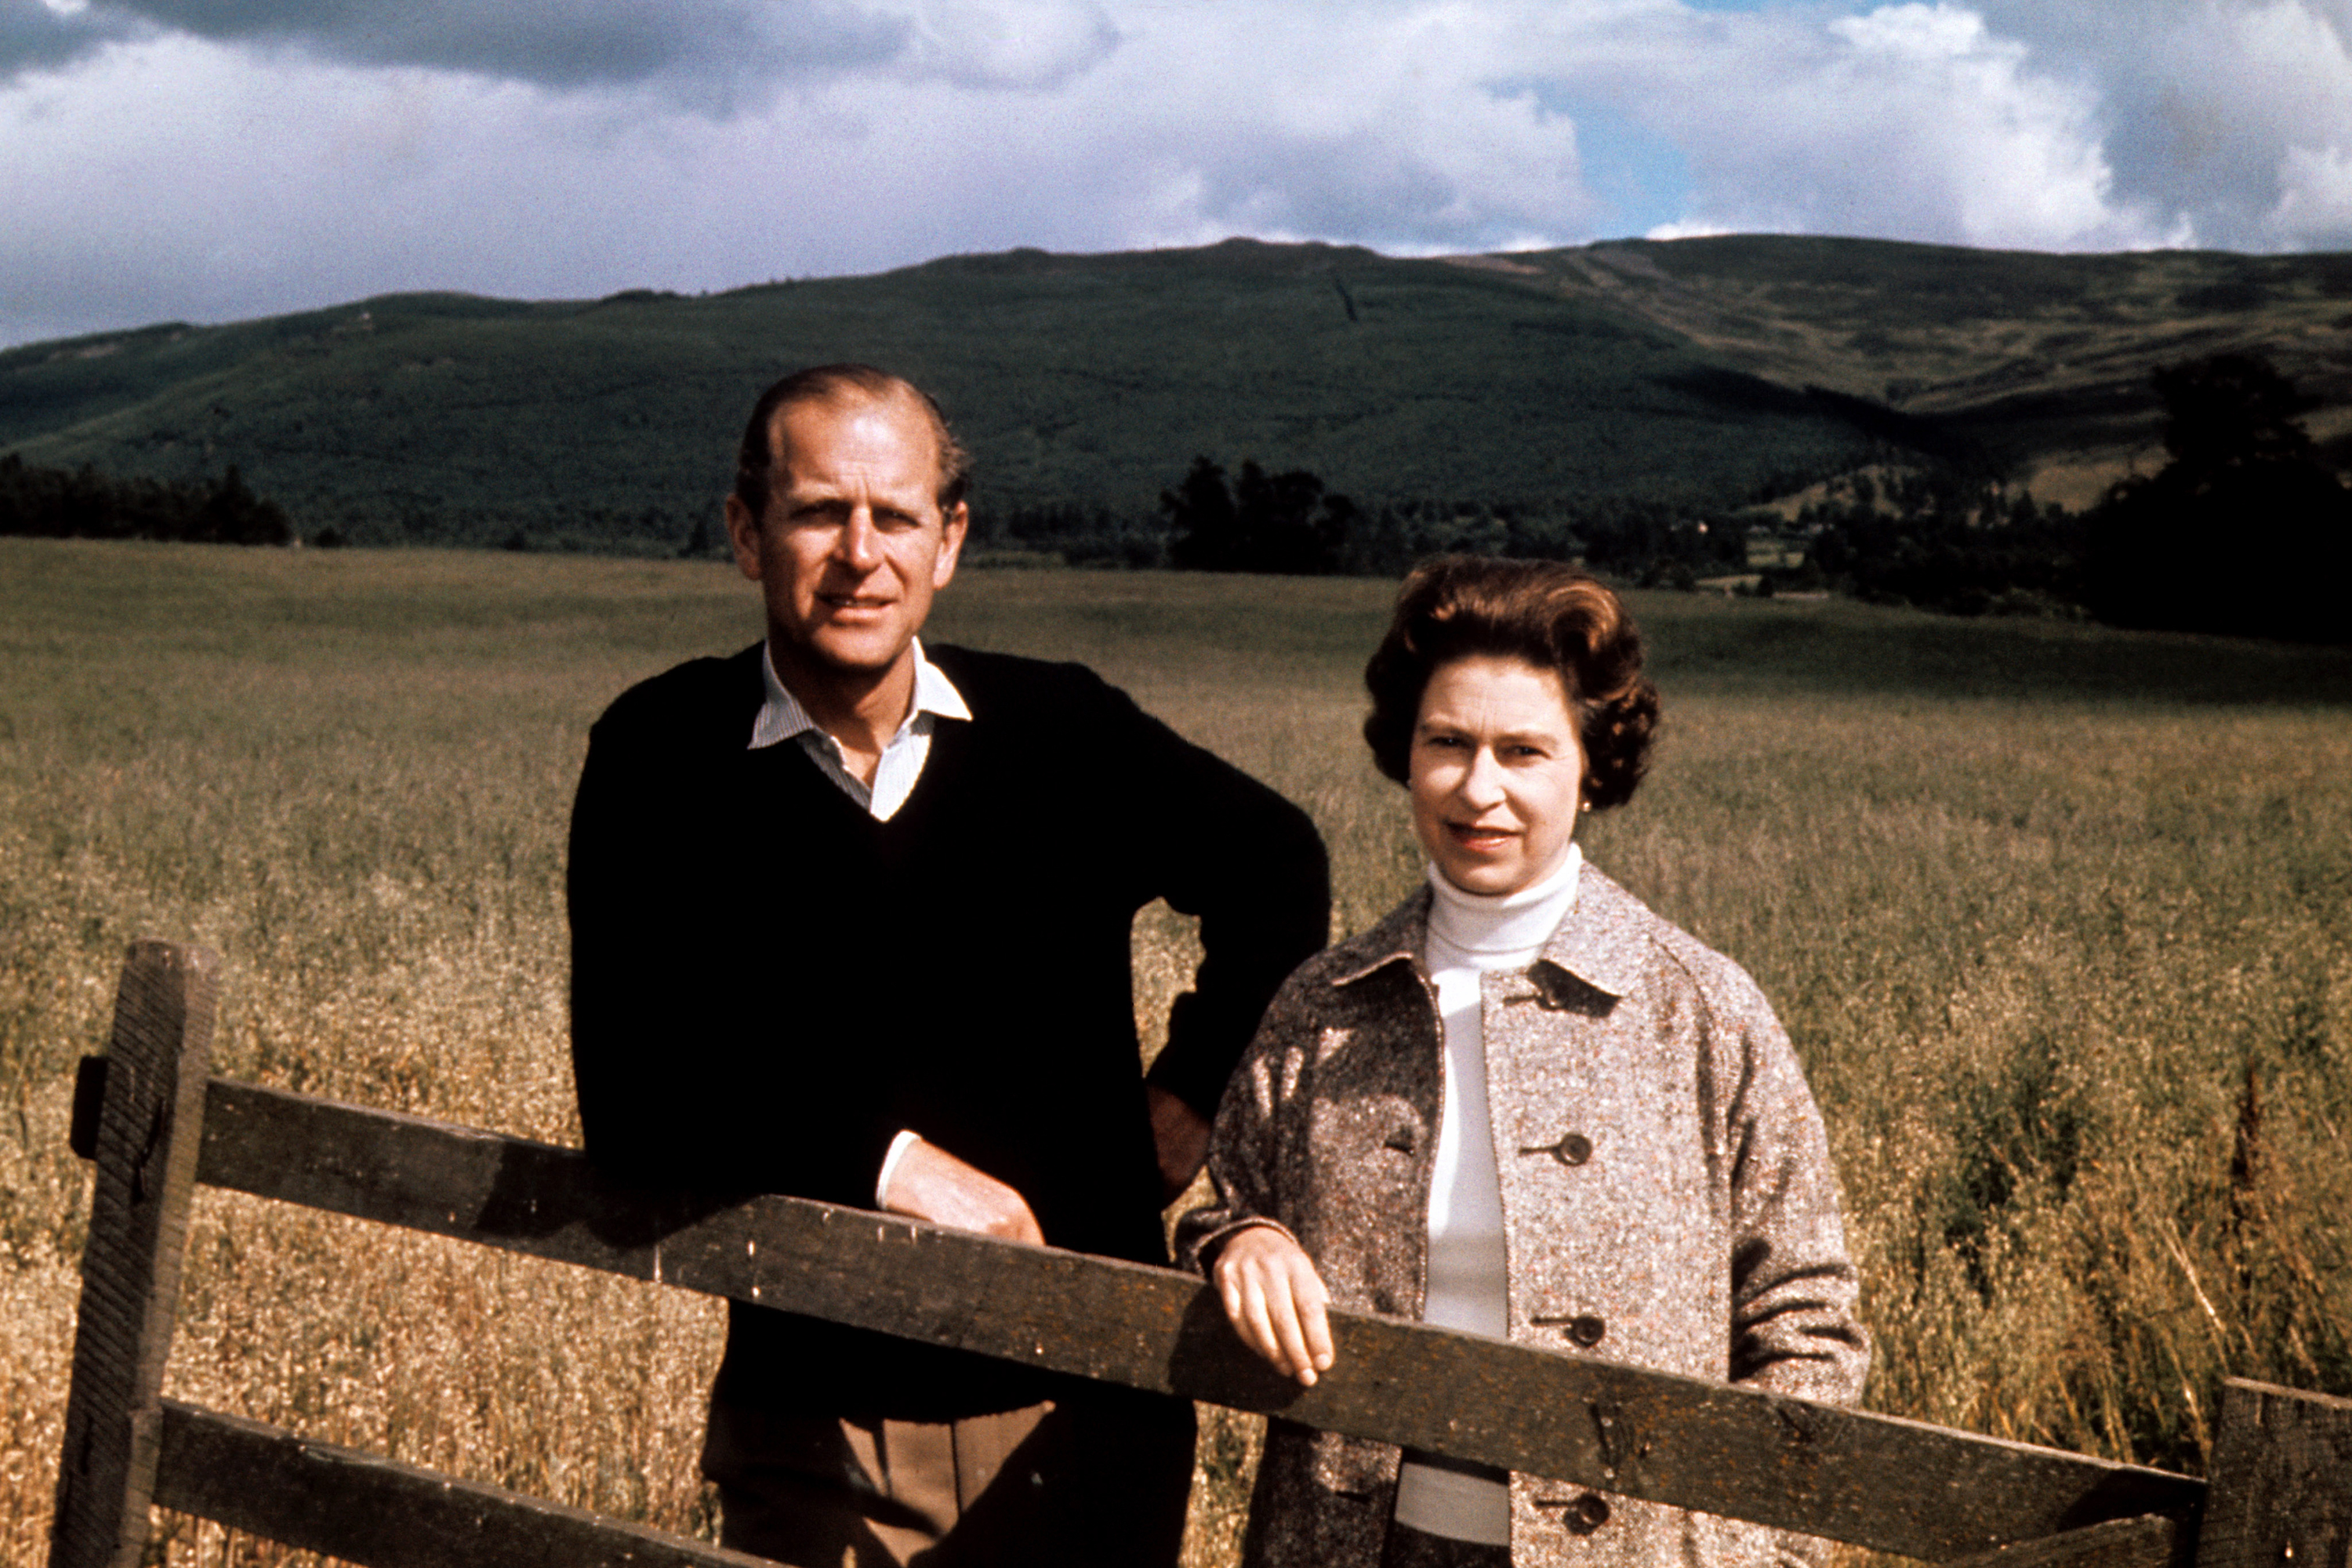 Queen Elizabeth II and the Duke of Edinburgh at Balmoral in 1972